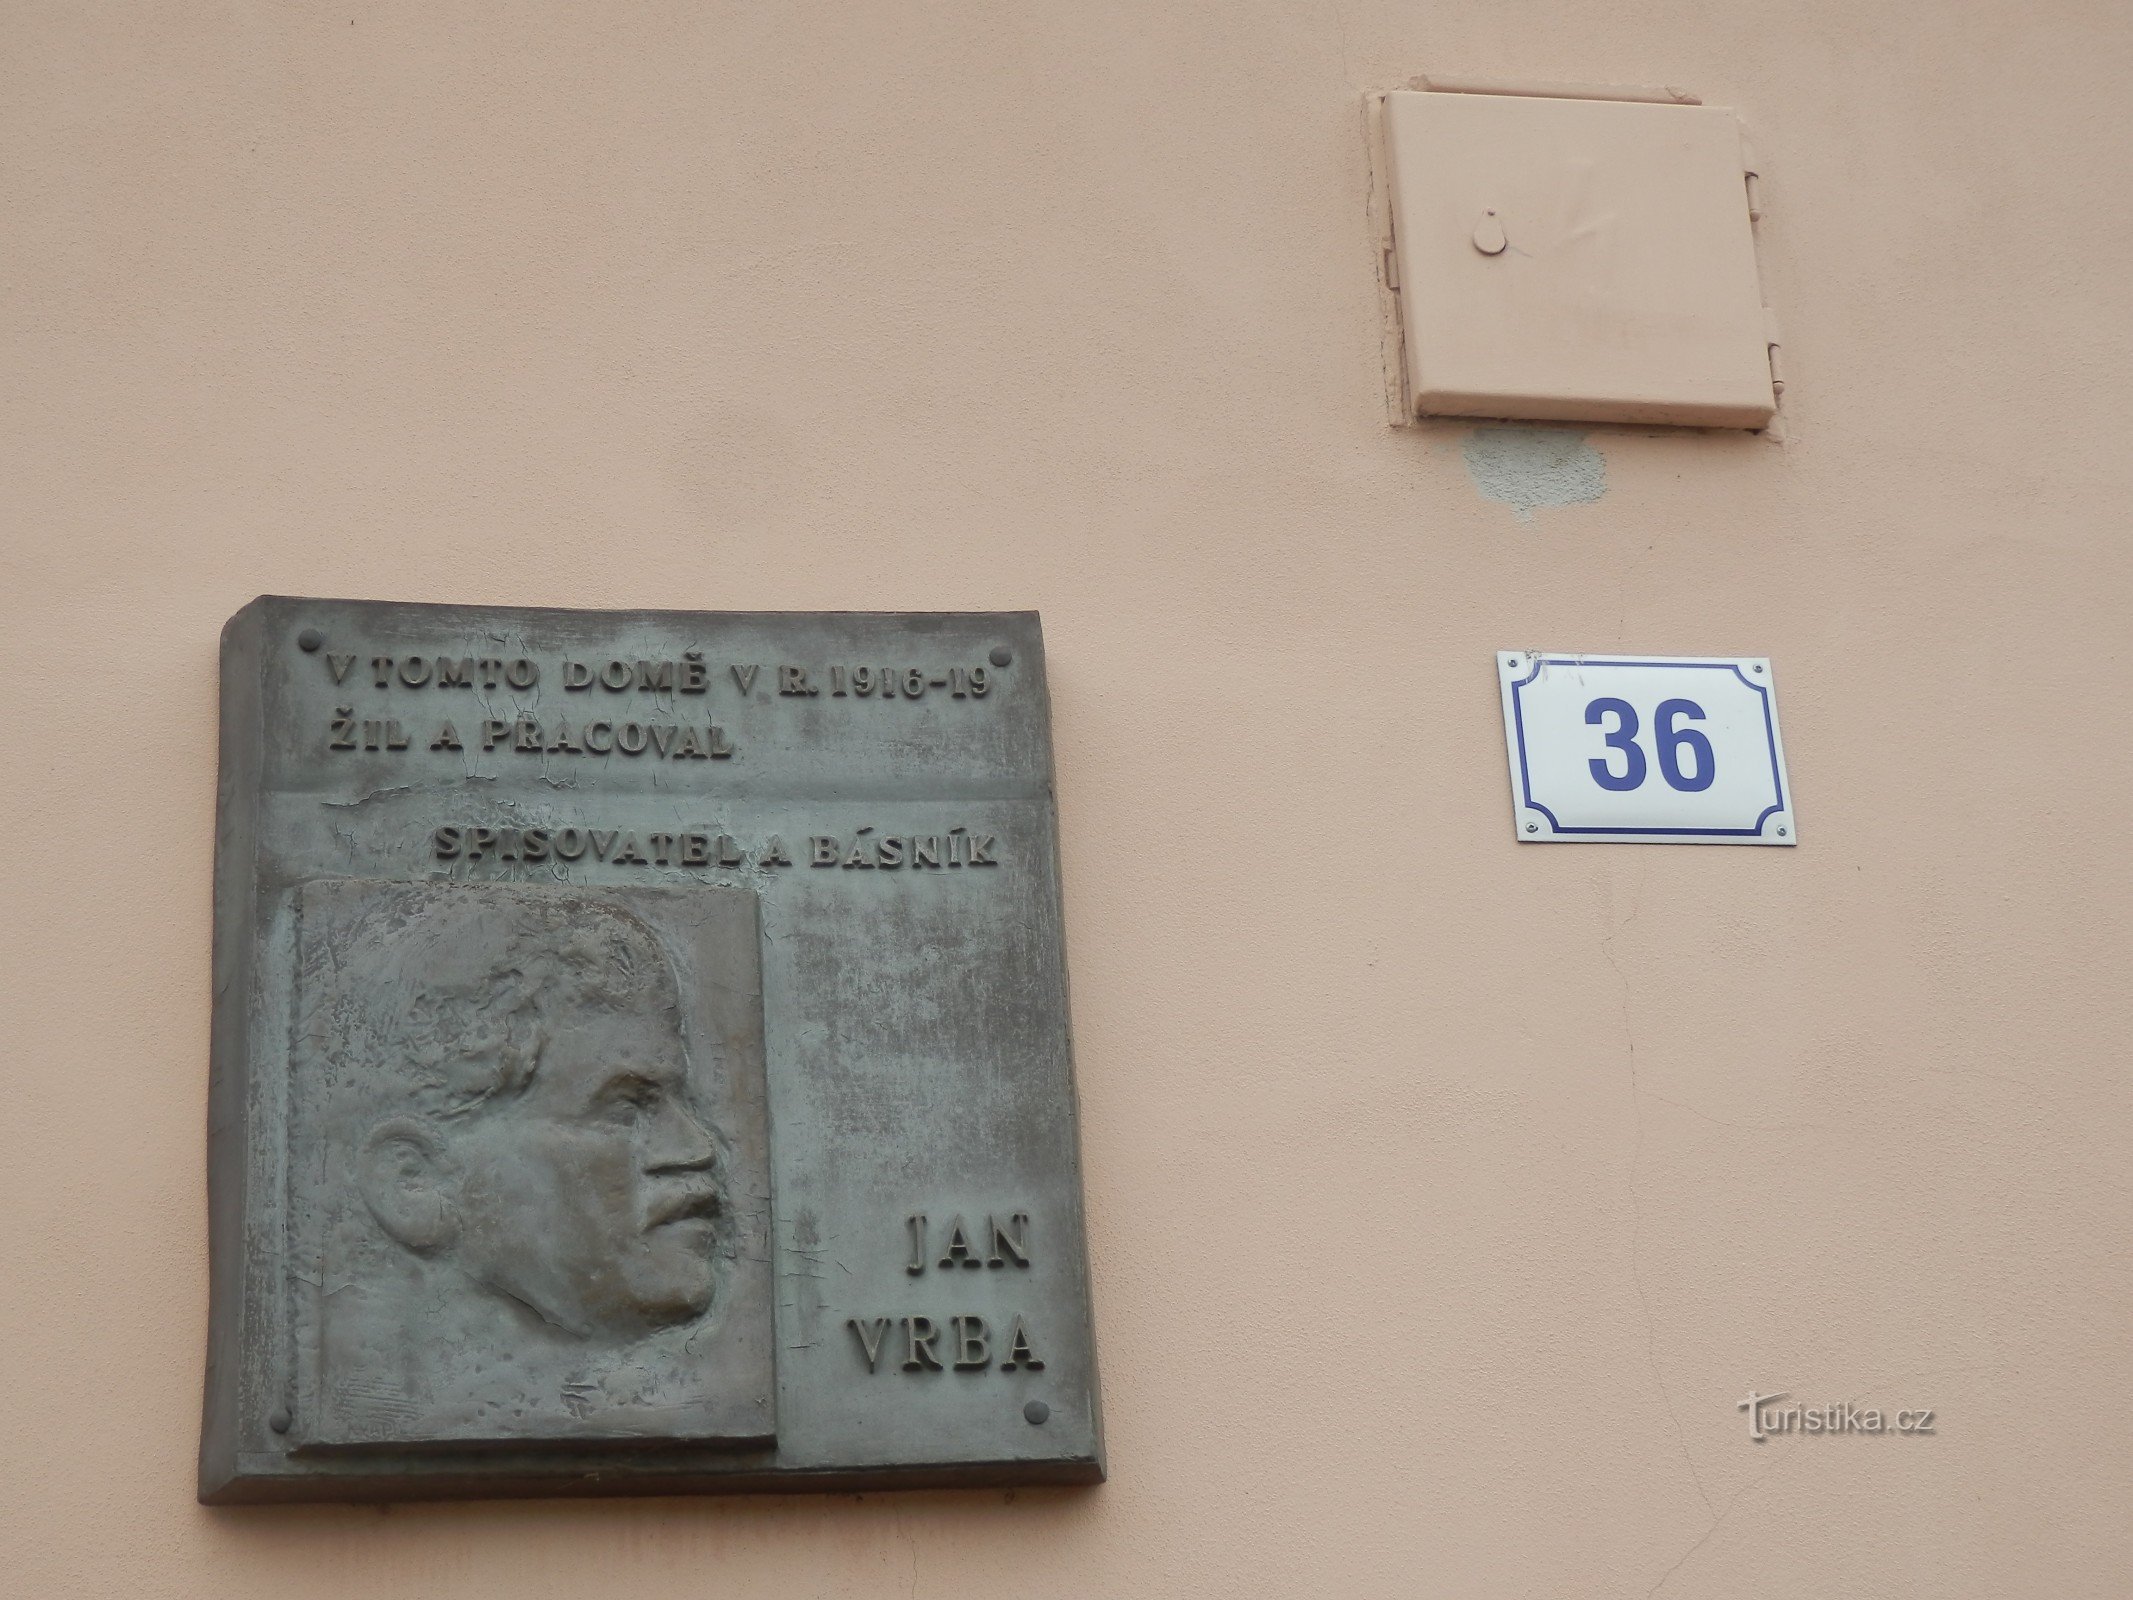 commemorative plaque of the writer J. Vrba